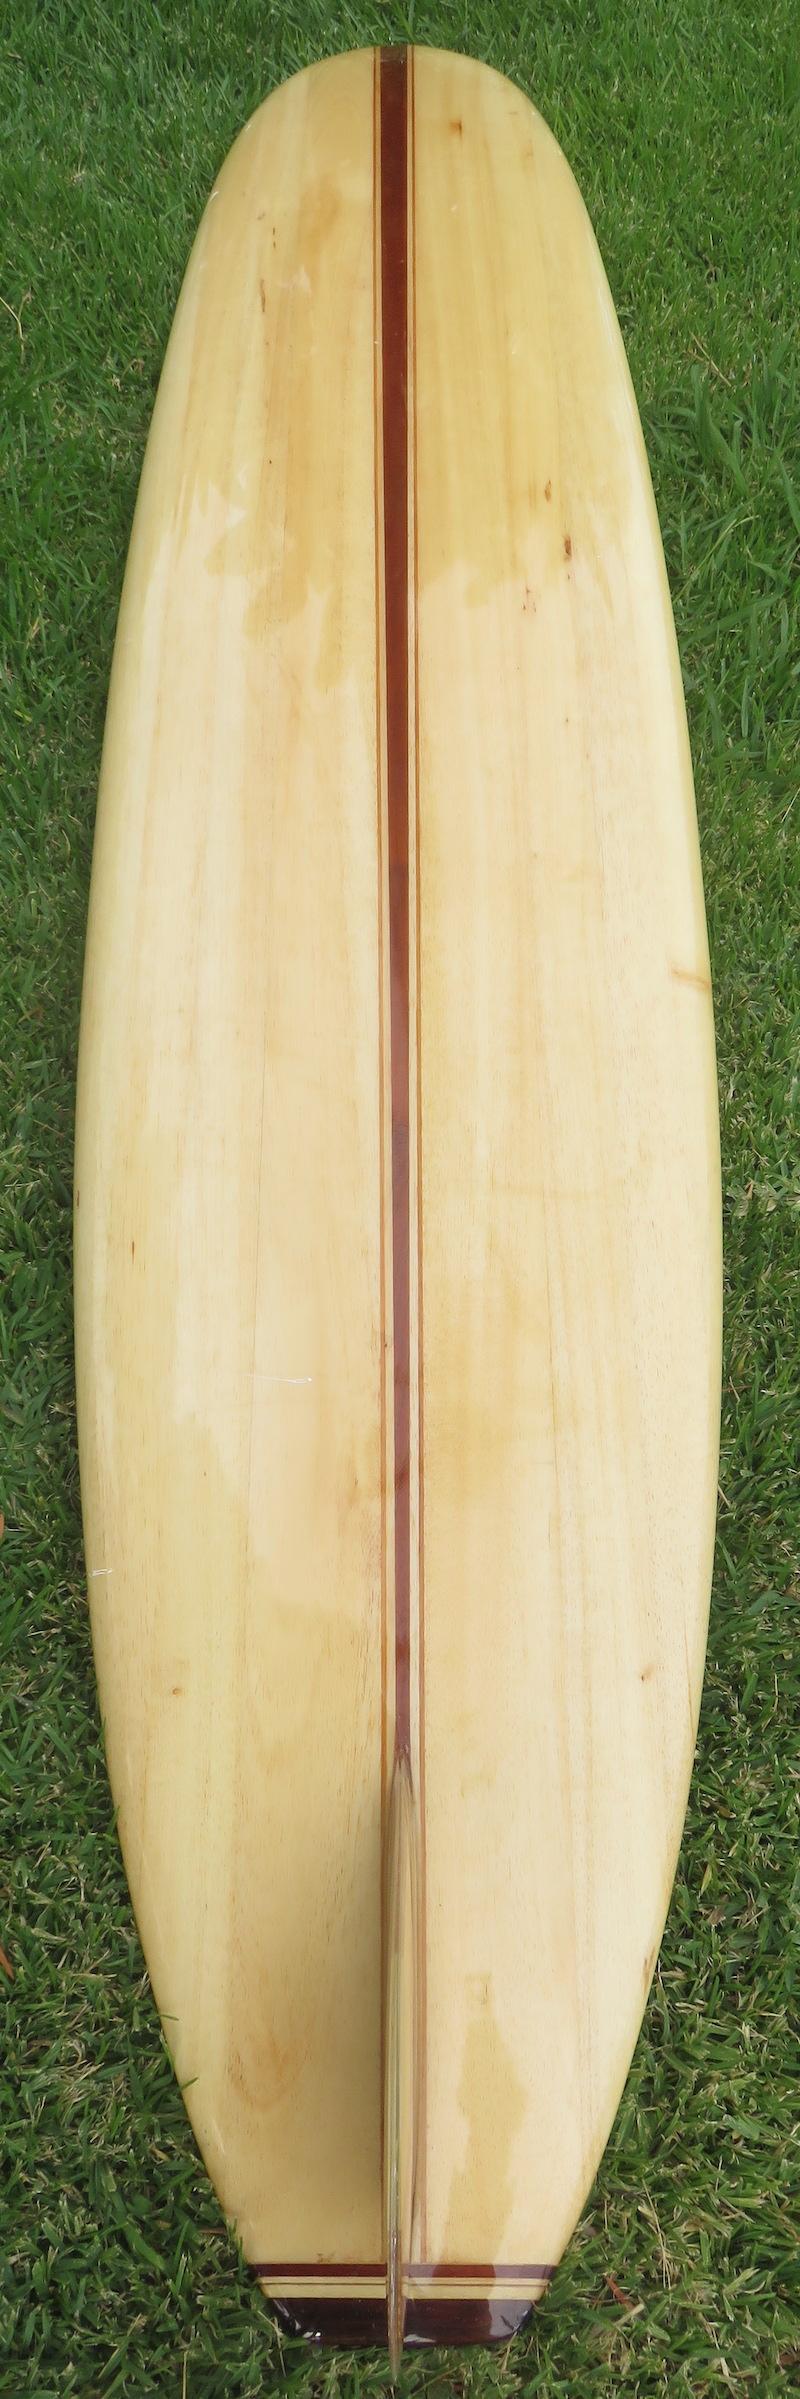 Dale Velzy Shaped Balsa Wood Longboard Surfboard In Good Condition For Sale In Haleiwa, HI